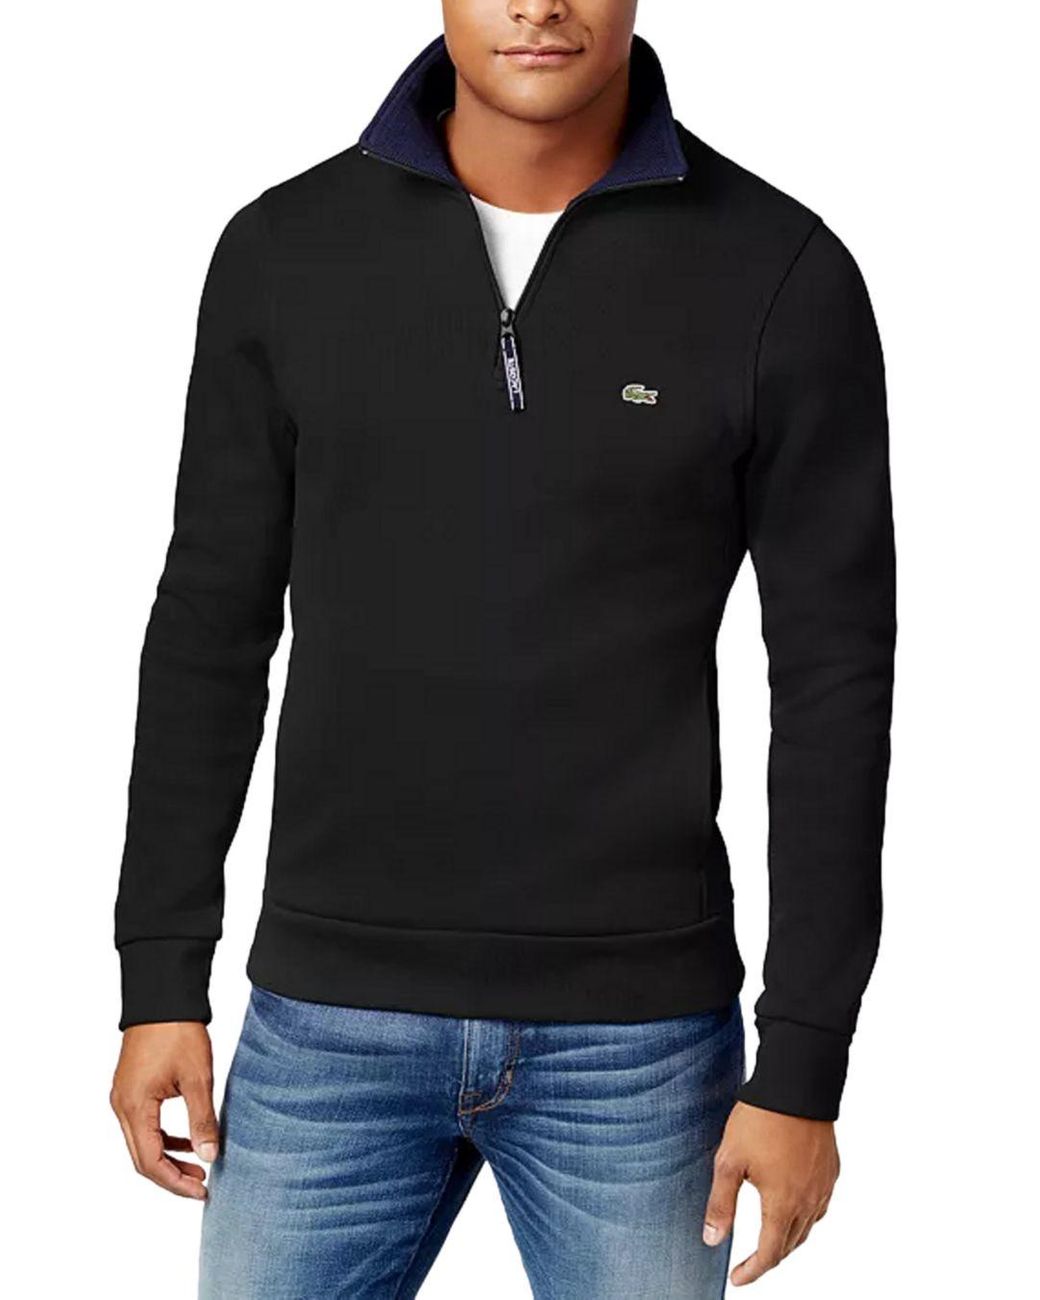 Lacoste Mens Long Sleeve Quarter Zip Cotton Sweatshirt 